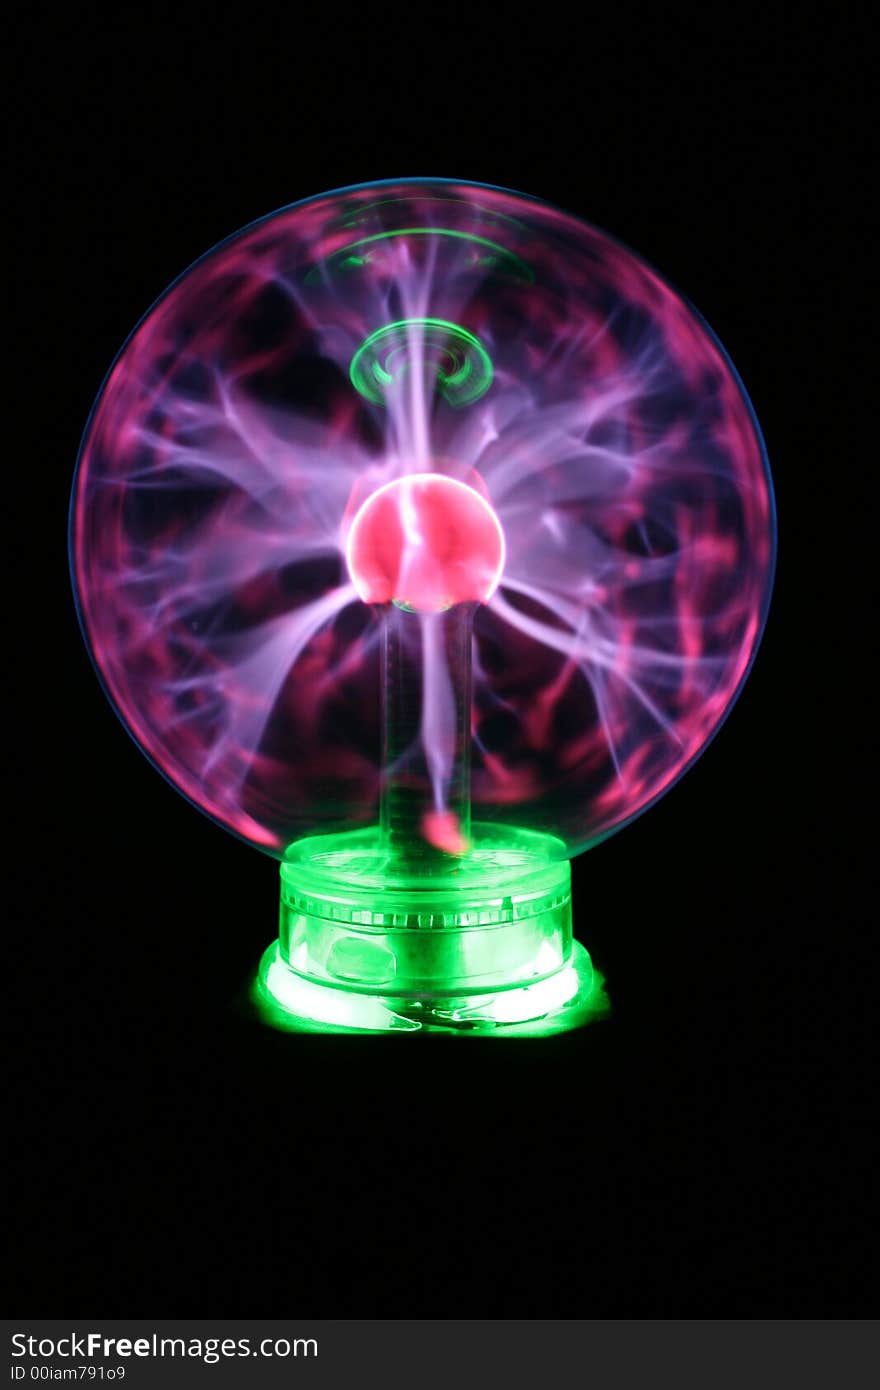 Plasma ball with green neon lights